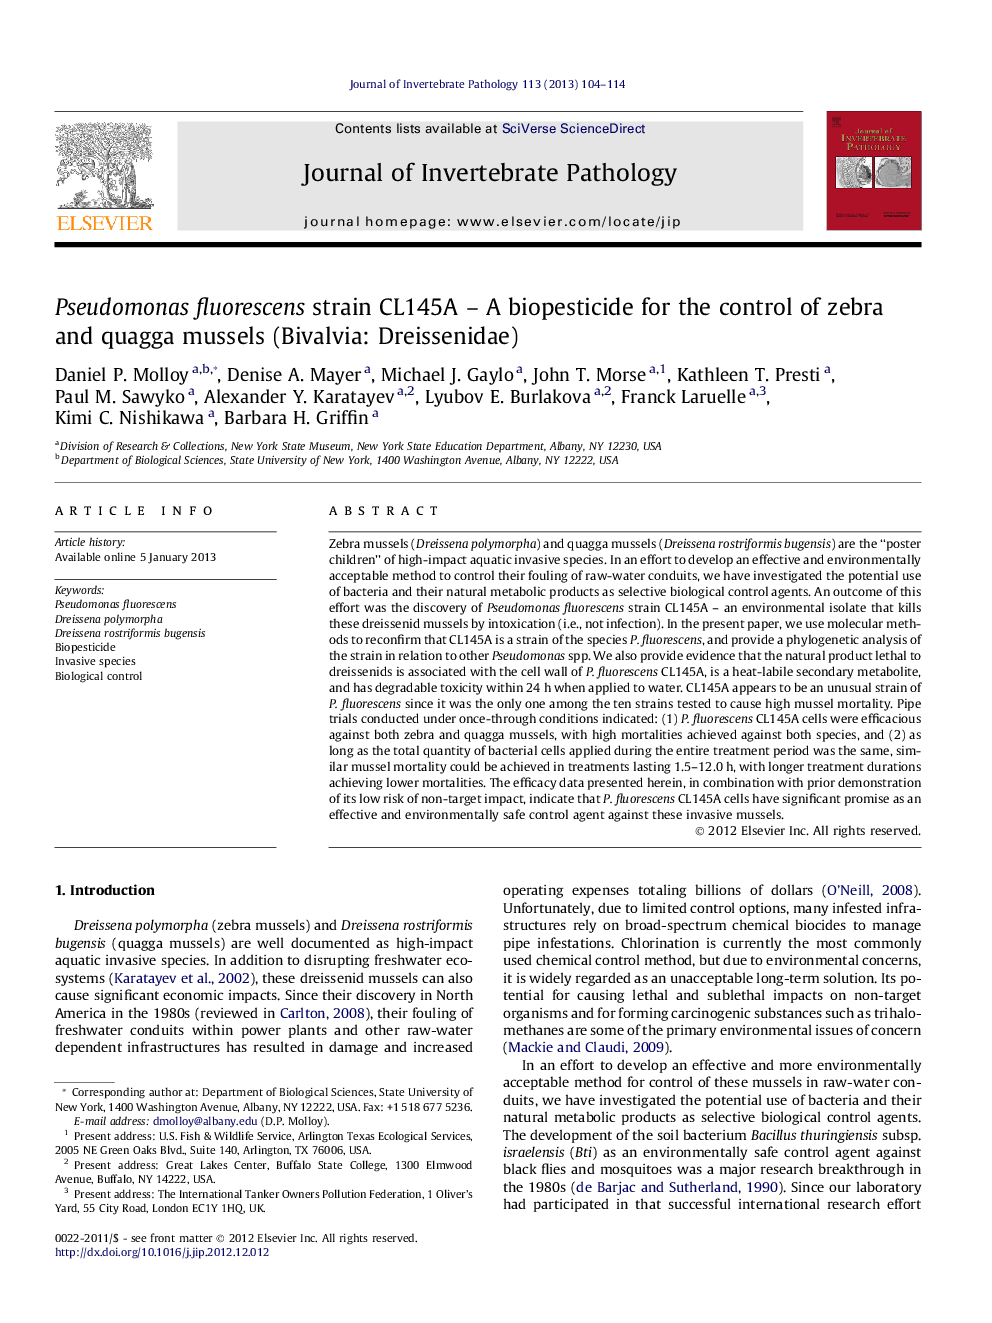 Pseudomonas fluorescens strain CL145A – A biopesticide for the control of zebra and quagga mussels (Bivalvia: Dreissenidae)